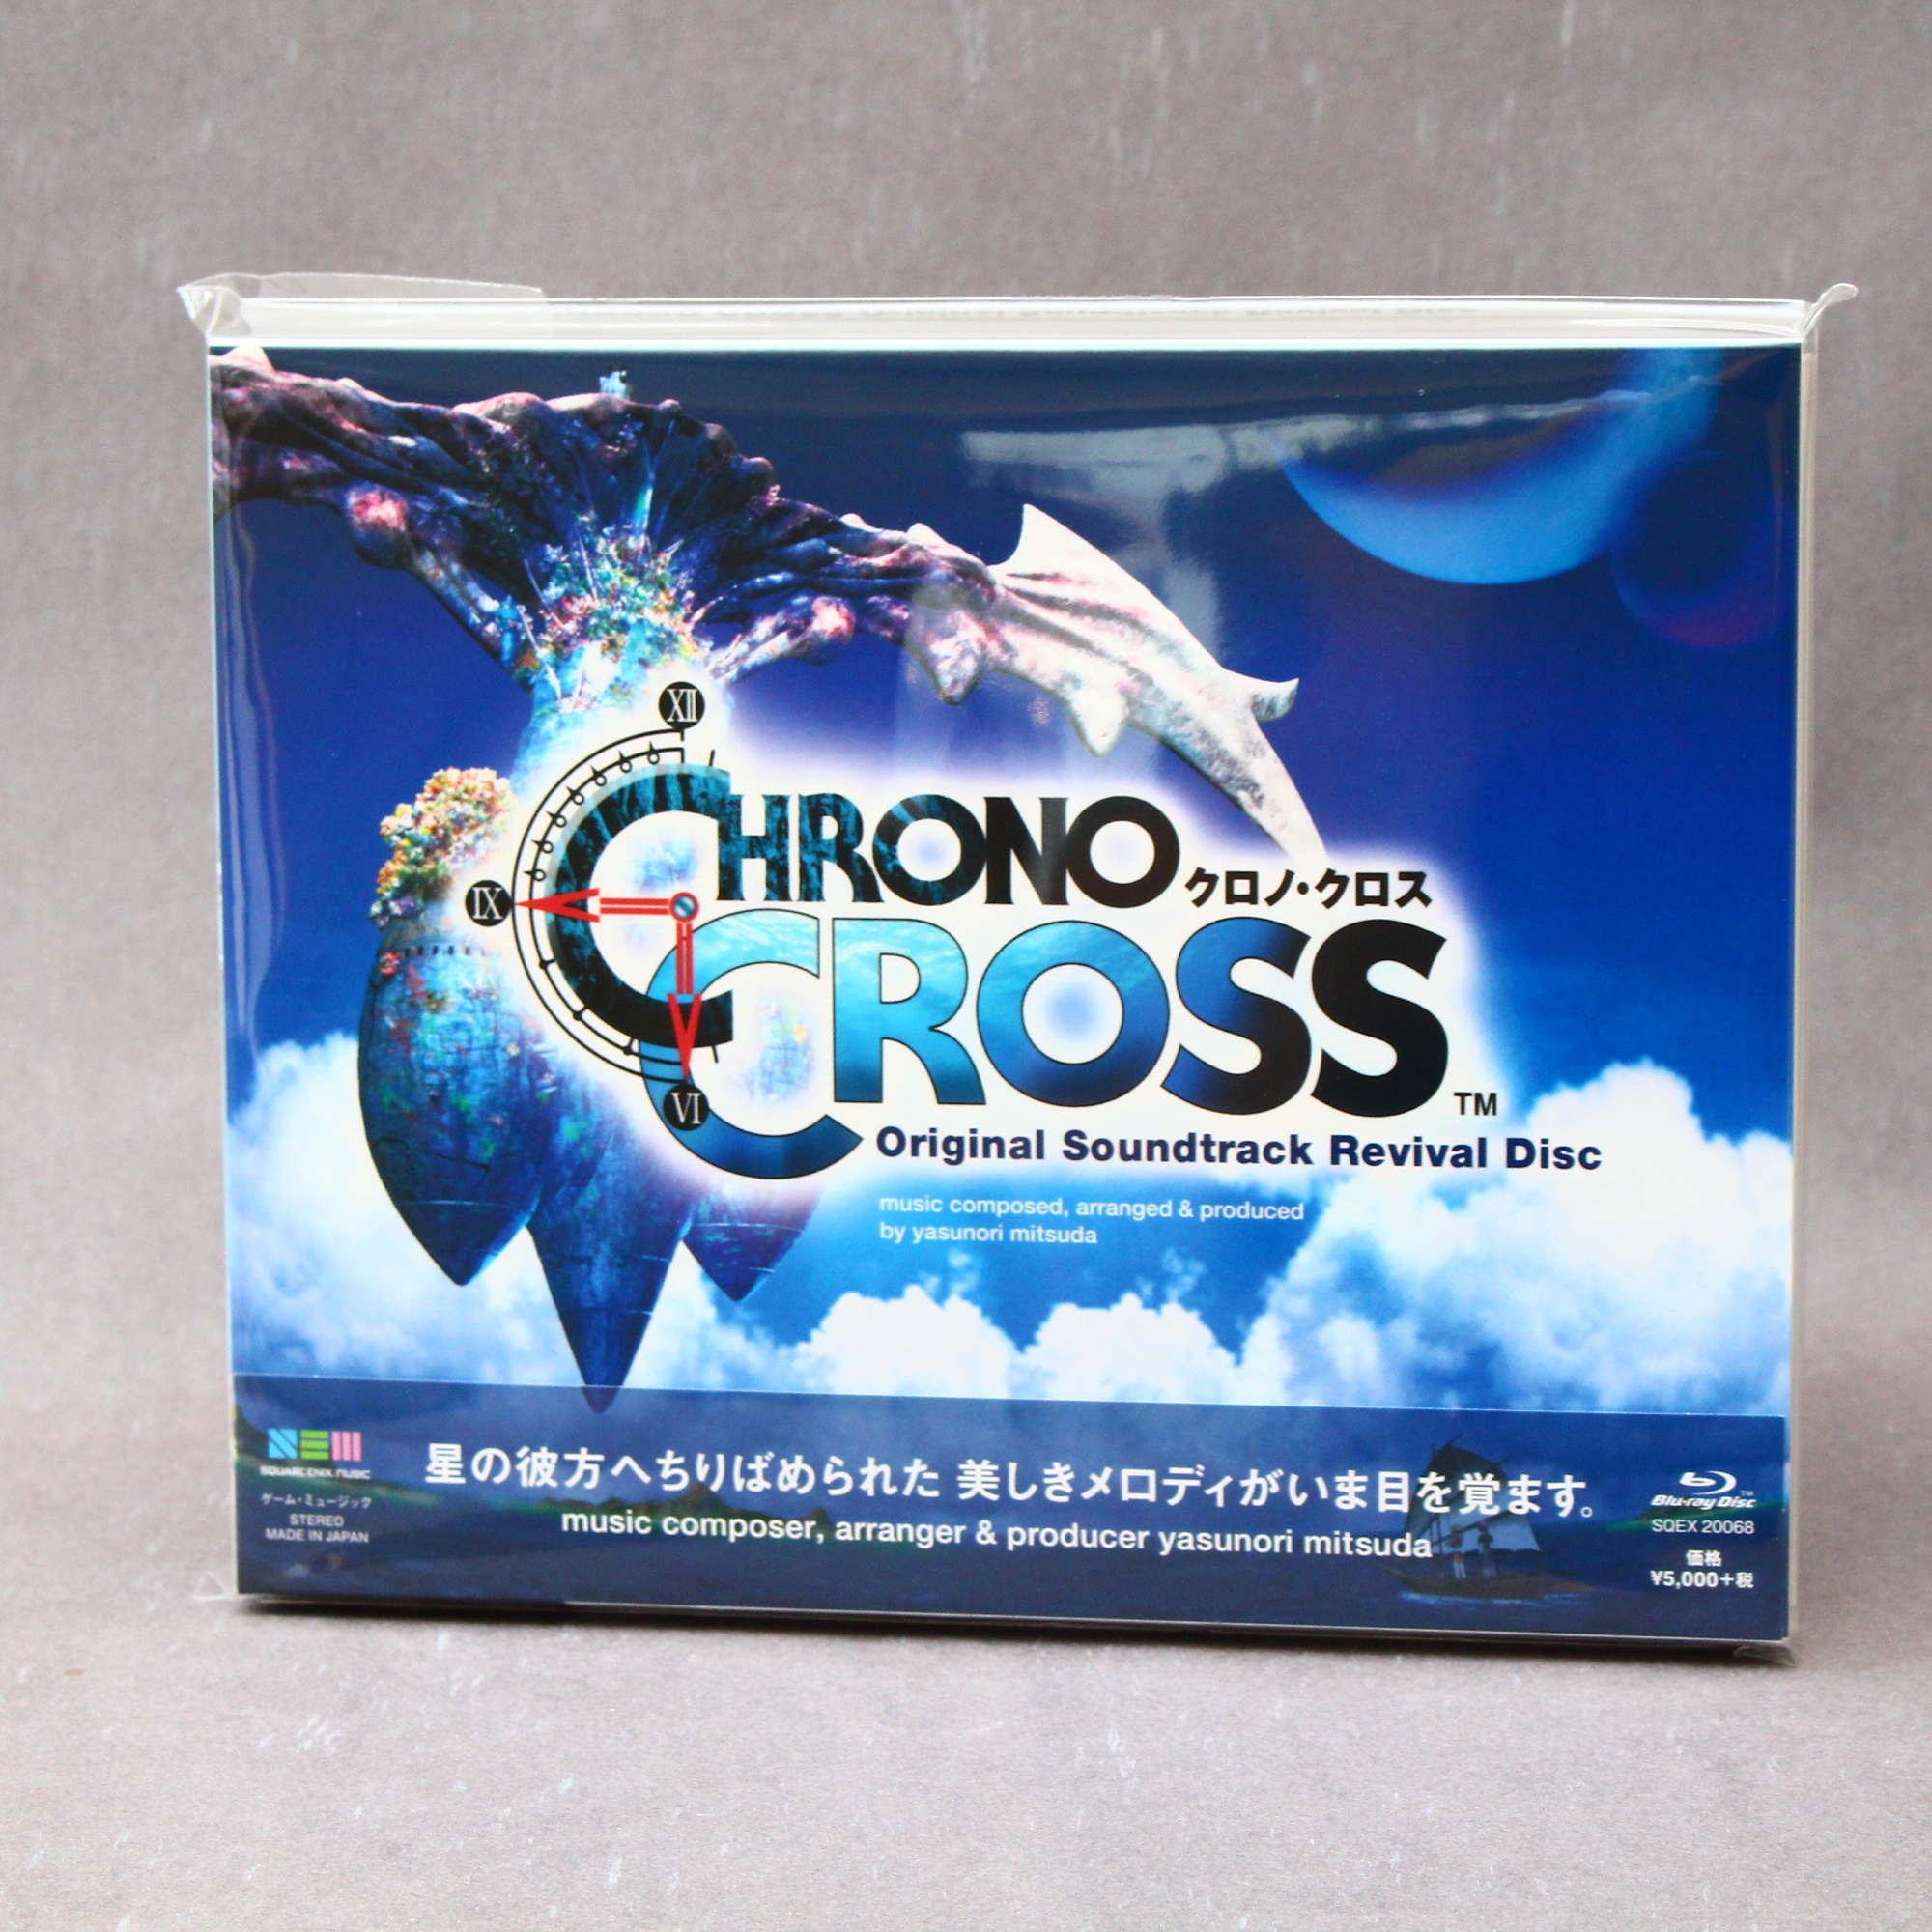 Chrono Cross Original Soundtrack Revival Disc Blu Ray Audio